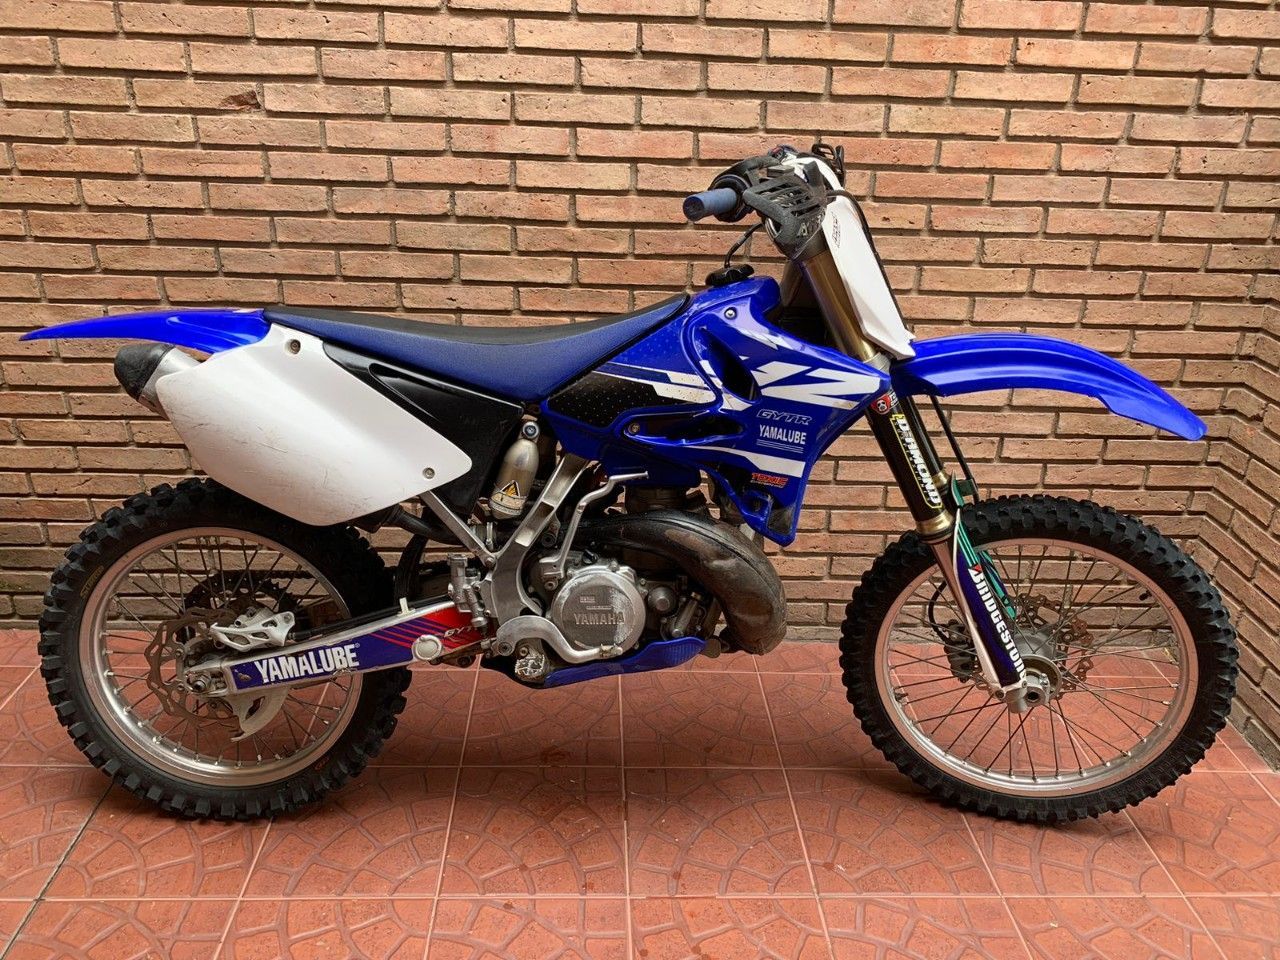 Yamaha YZ Usada en Mendoza, deRuedas